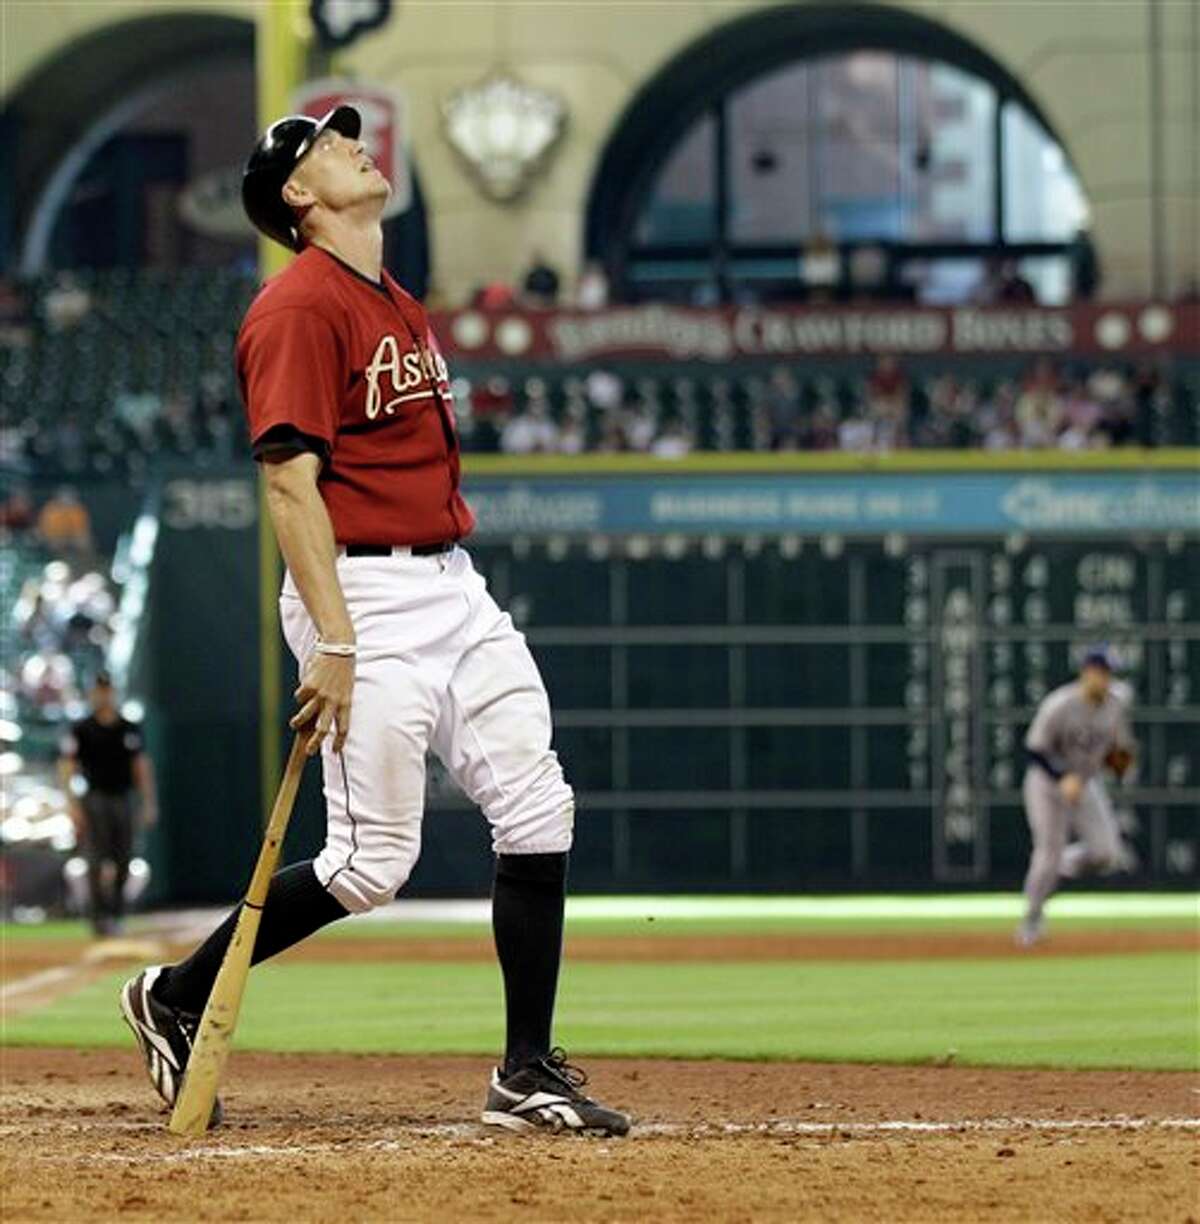 Houston Astros Report: The evolution of the rainbow uniform revealed